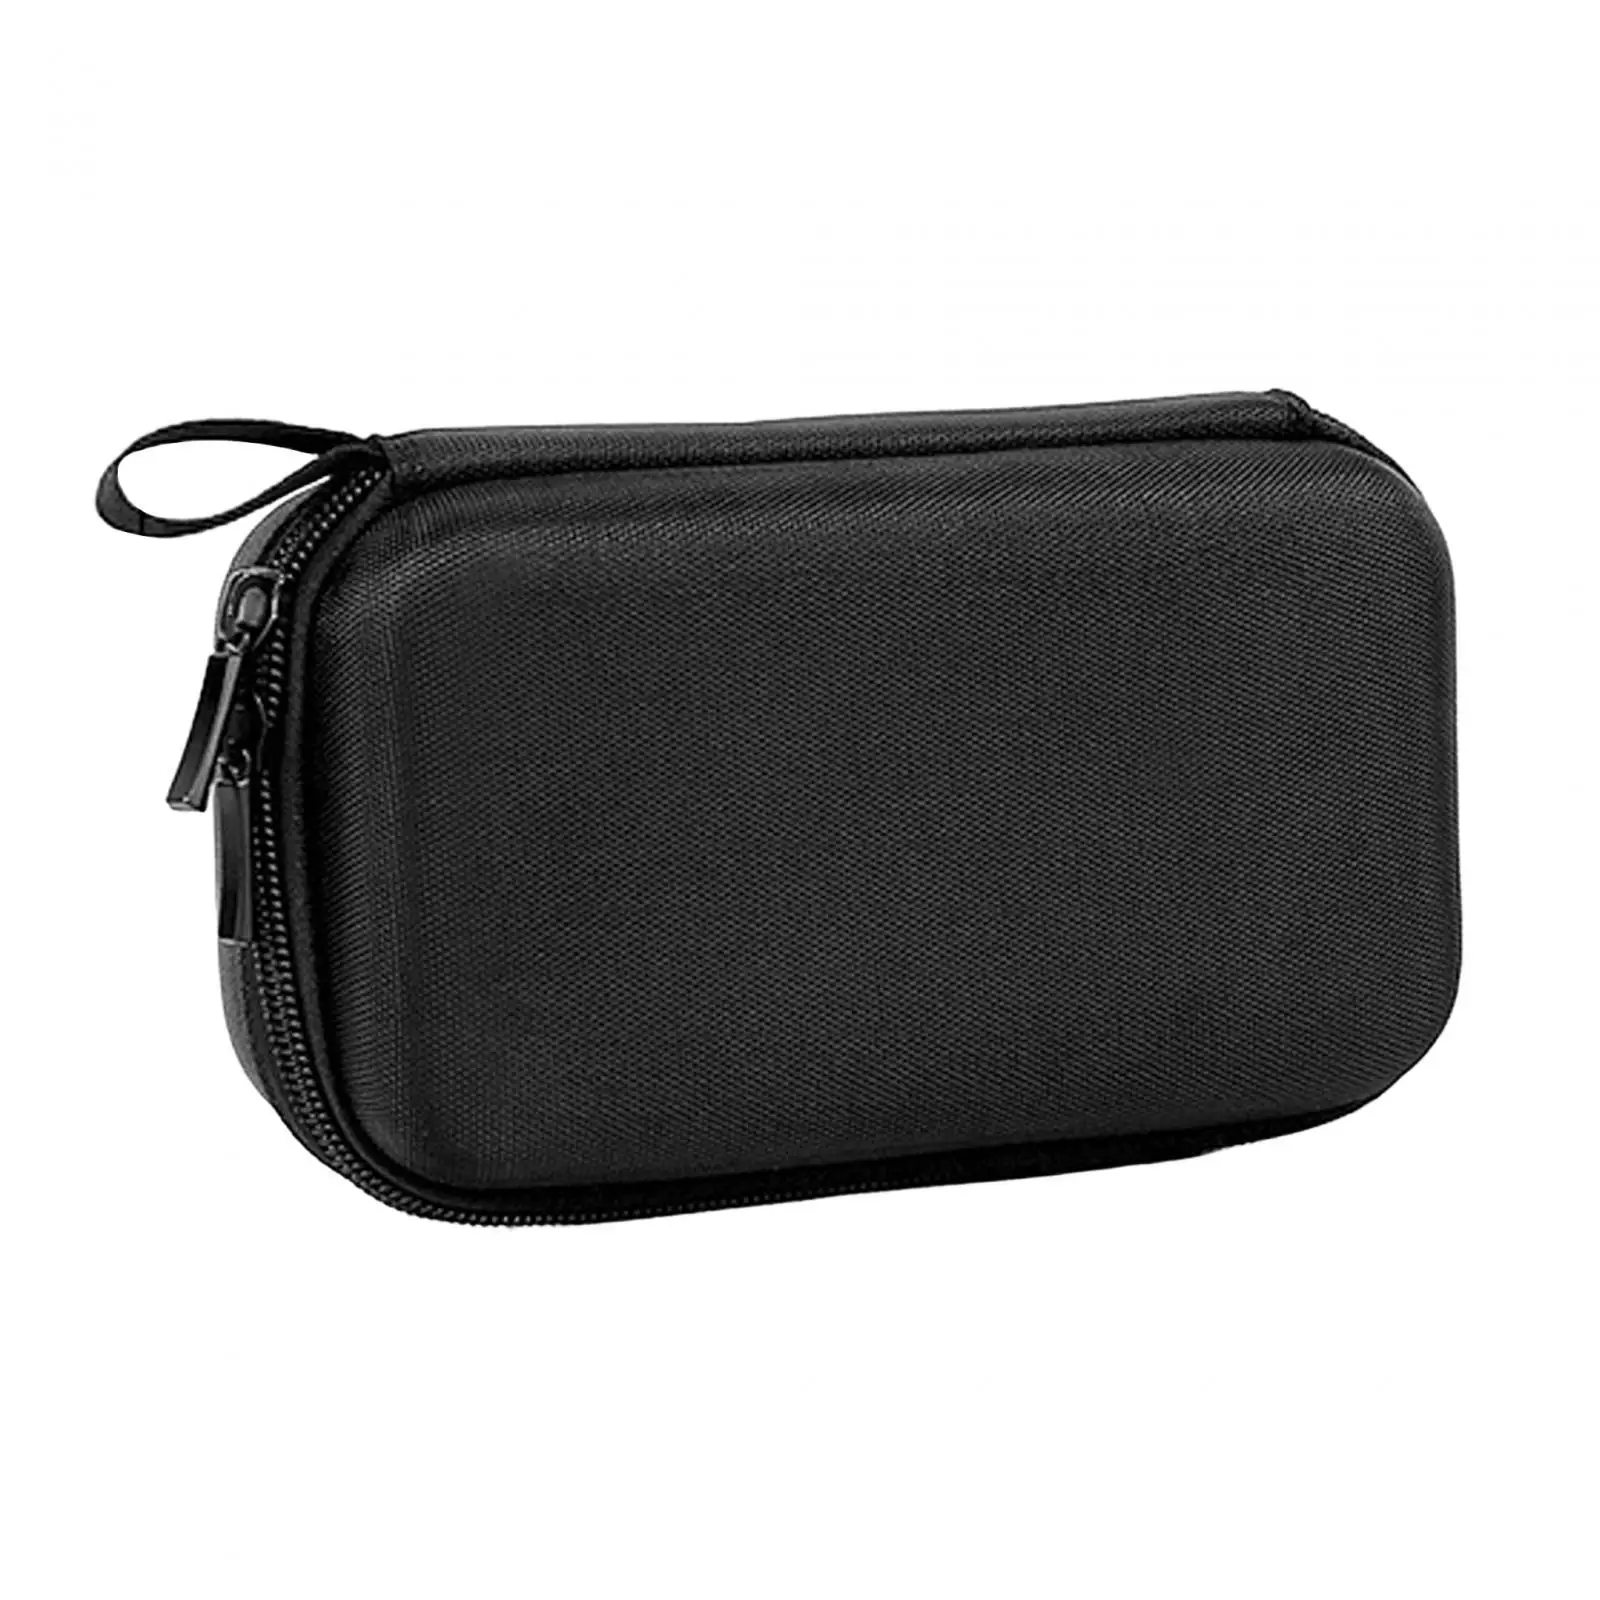 Action Camera Bag Camera Case Shockproof Waterproof Portable Handbag Carrying Case Travel Case for Go 3 Accessory Organizer